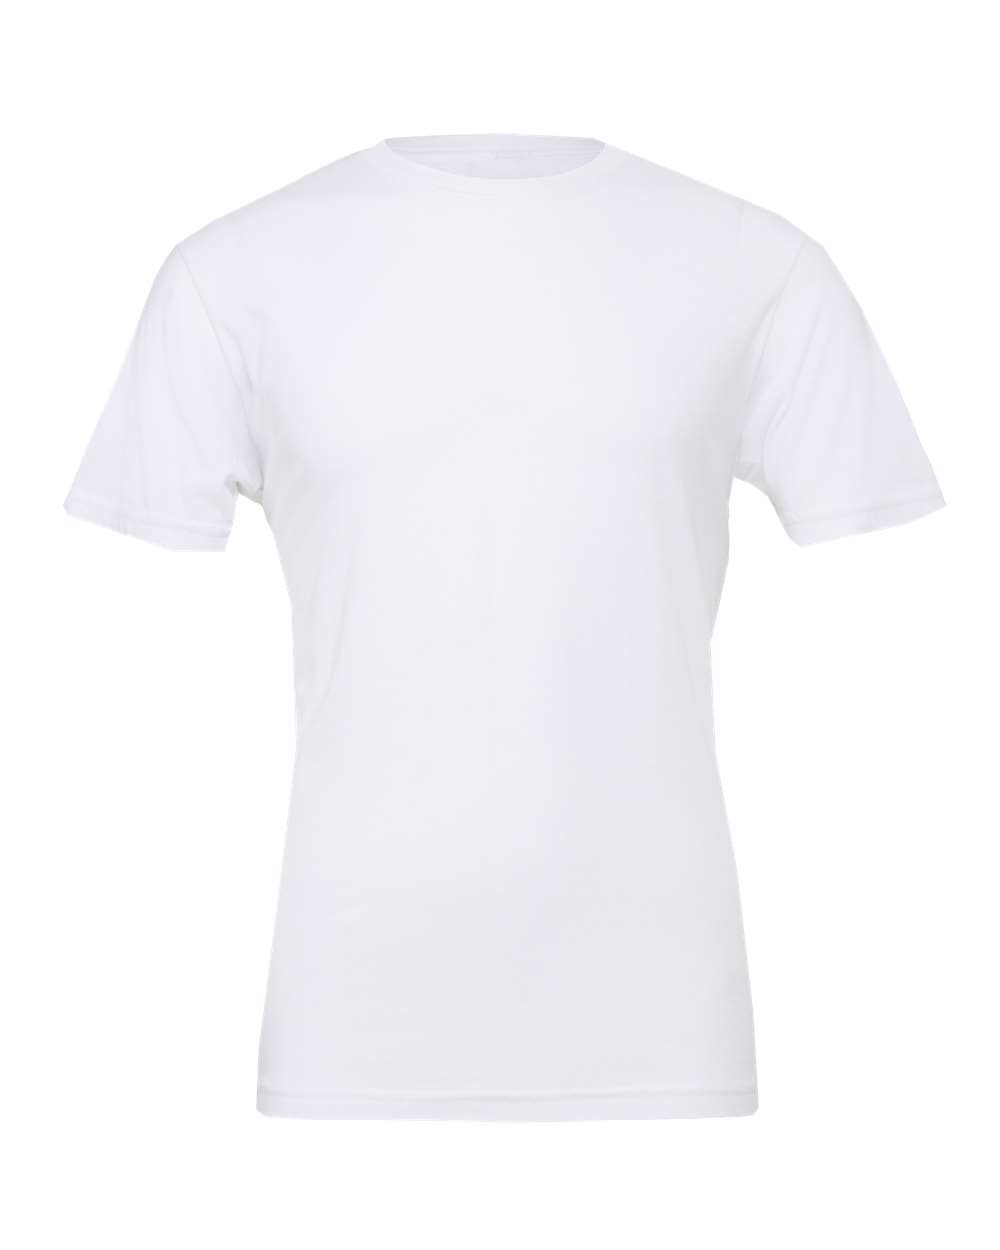 Bella+Canvas Unisex Jersey Heather Short Sleeve T-Shirt #3001